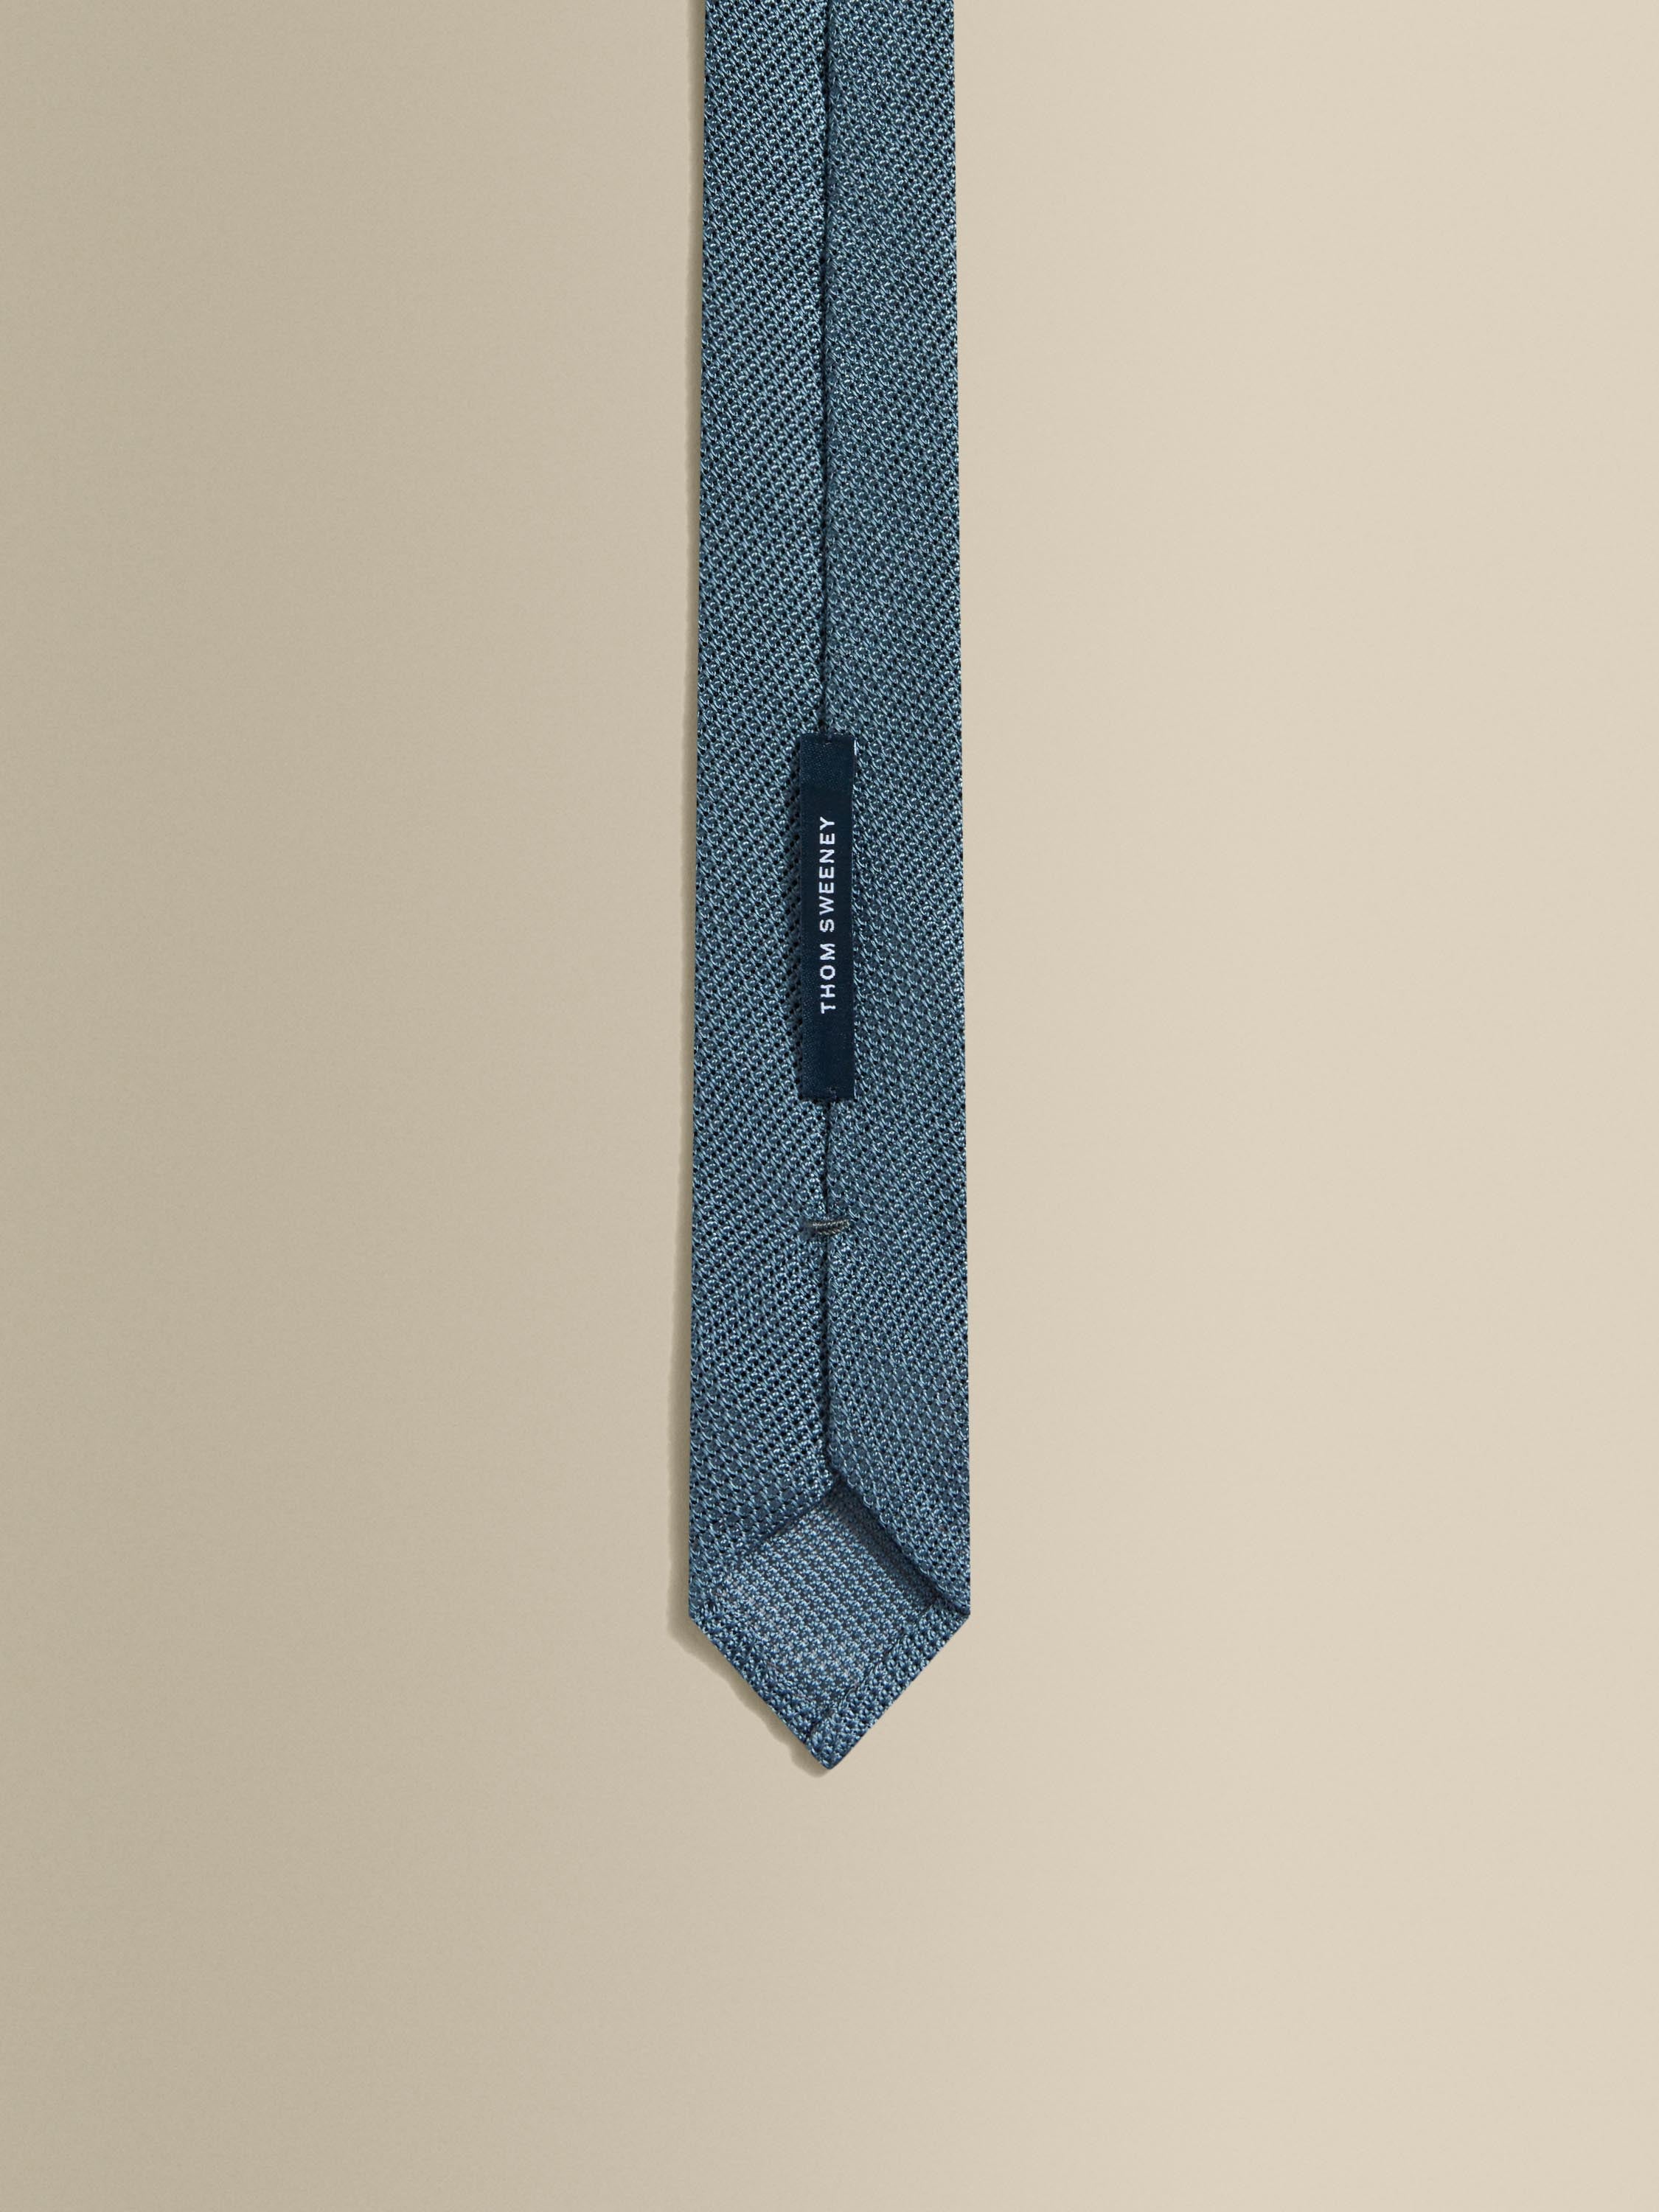 Silk Grenadine Tie Slate Grey Detail Product Image